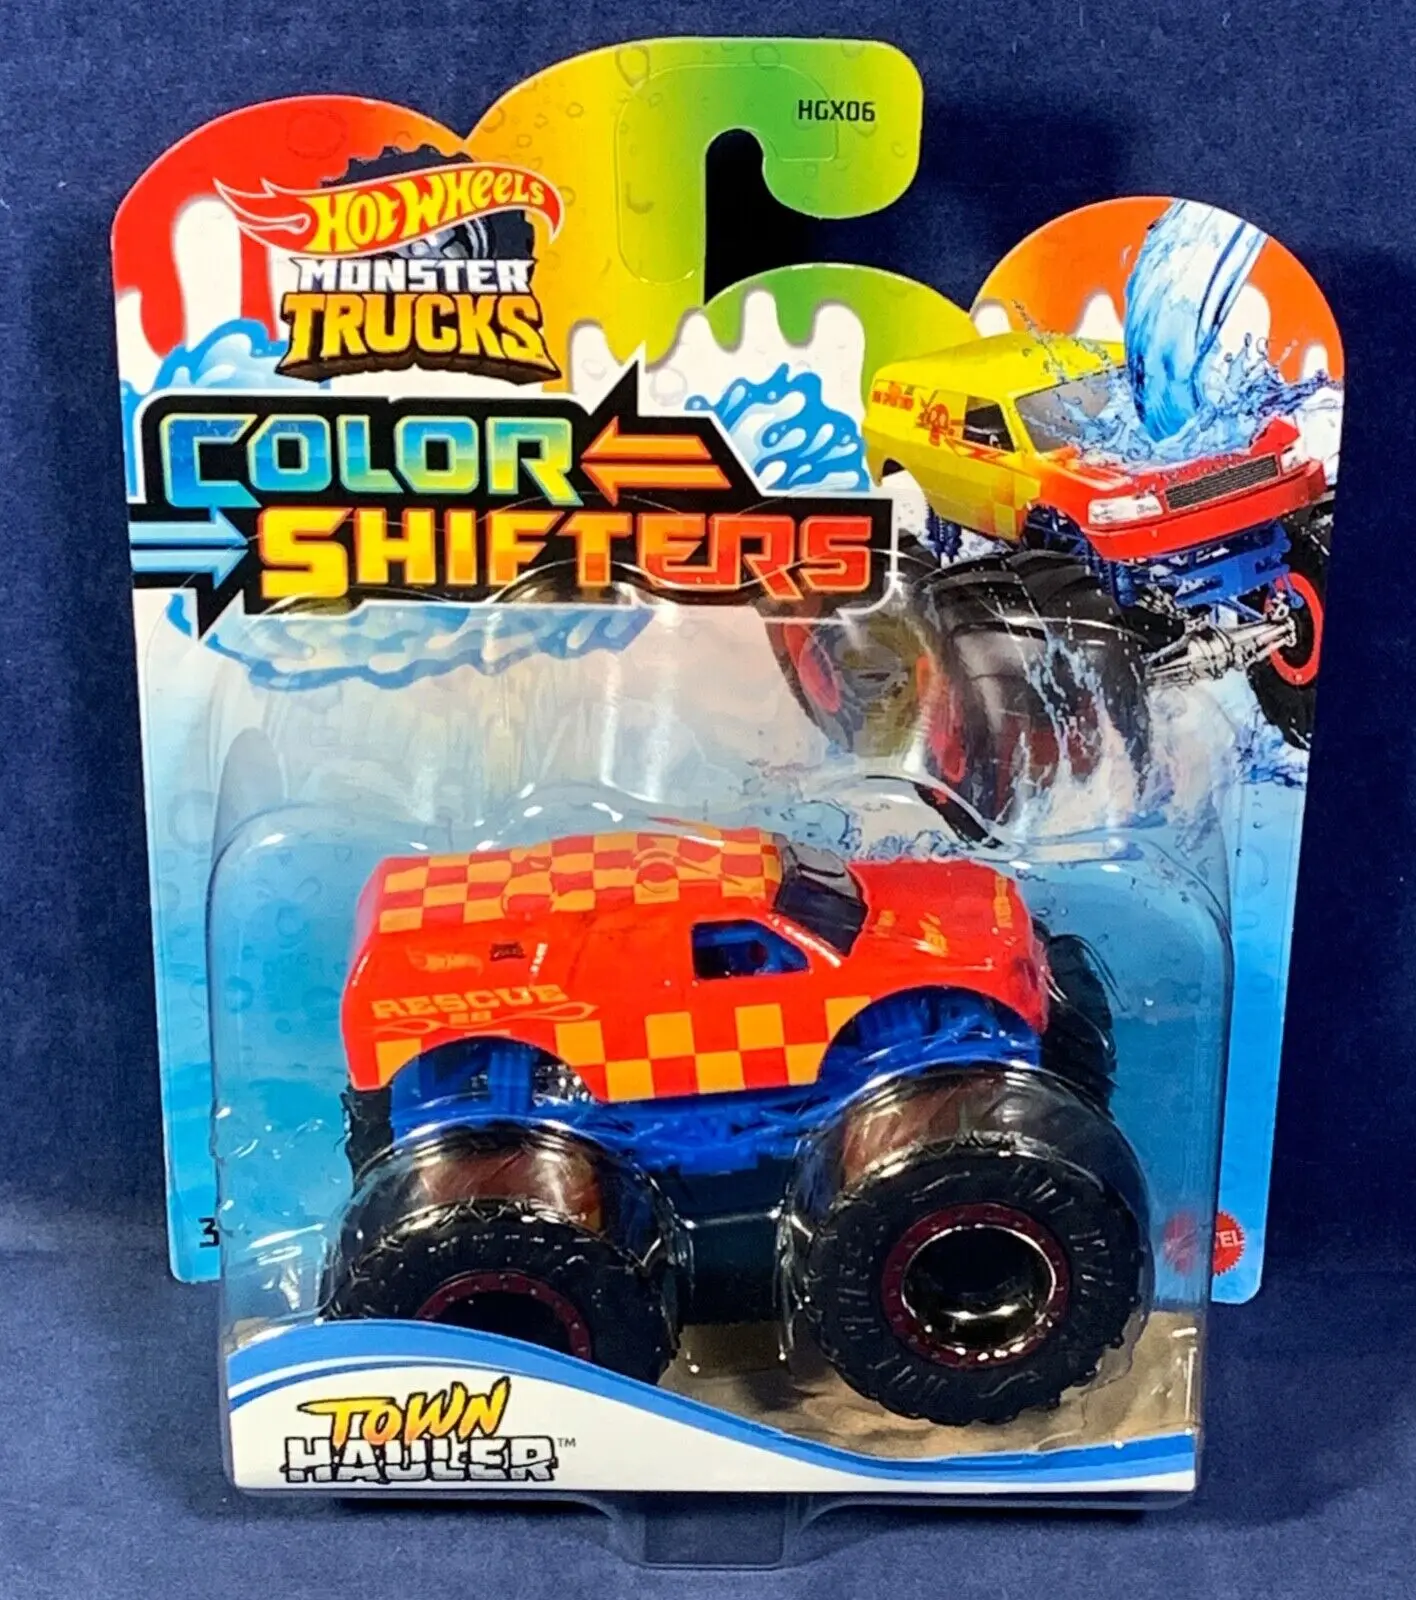 Hot Wheels Color Shifters S-corpedo